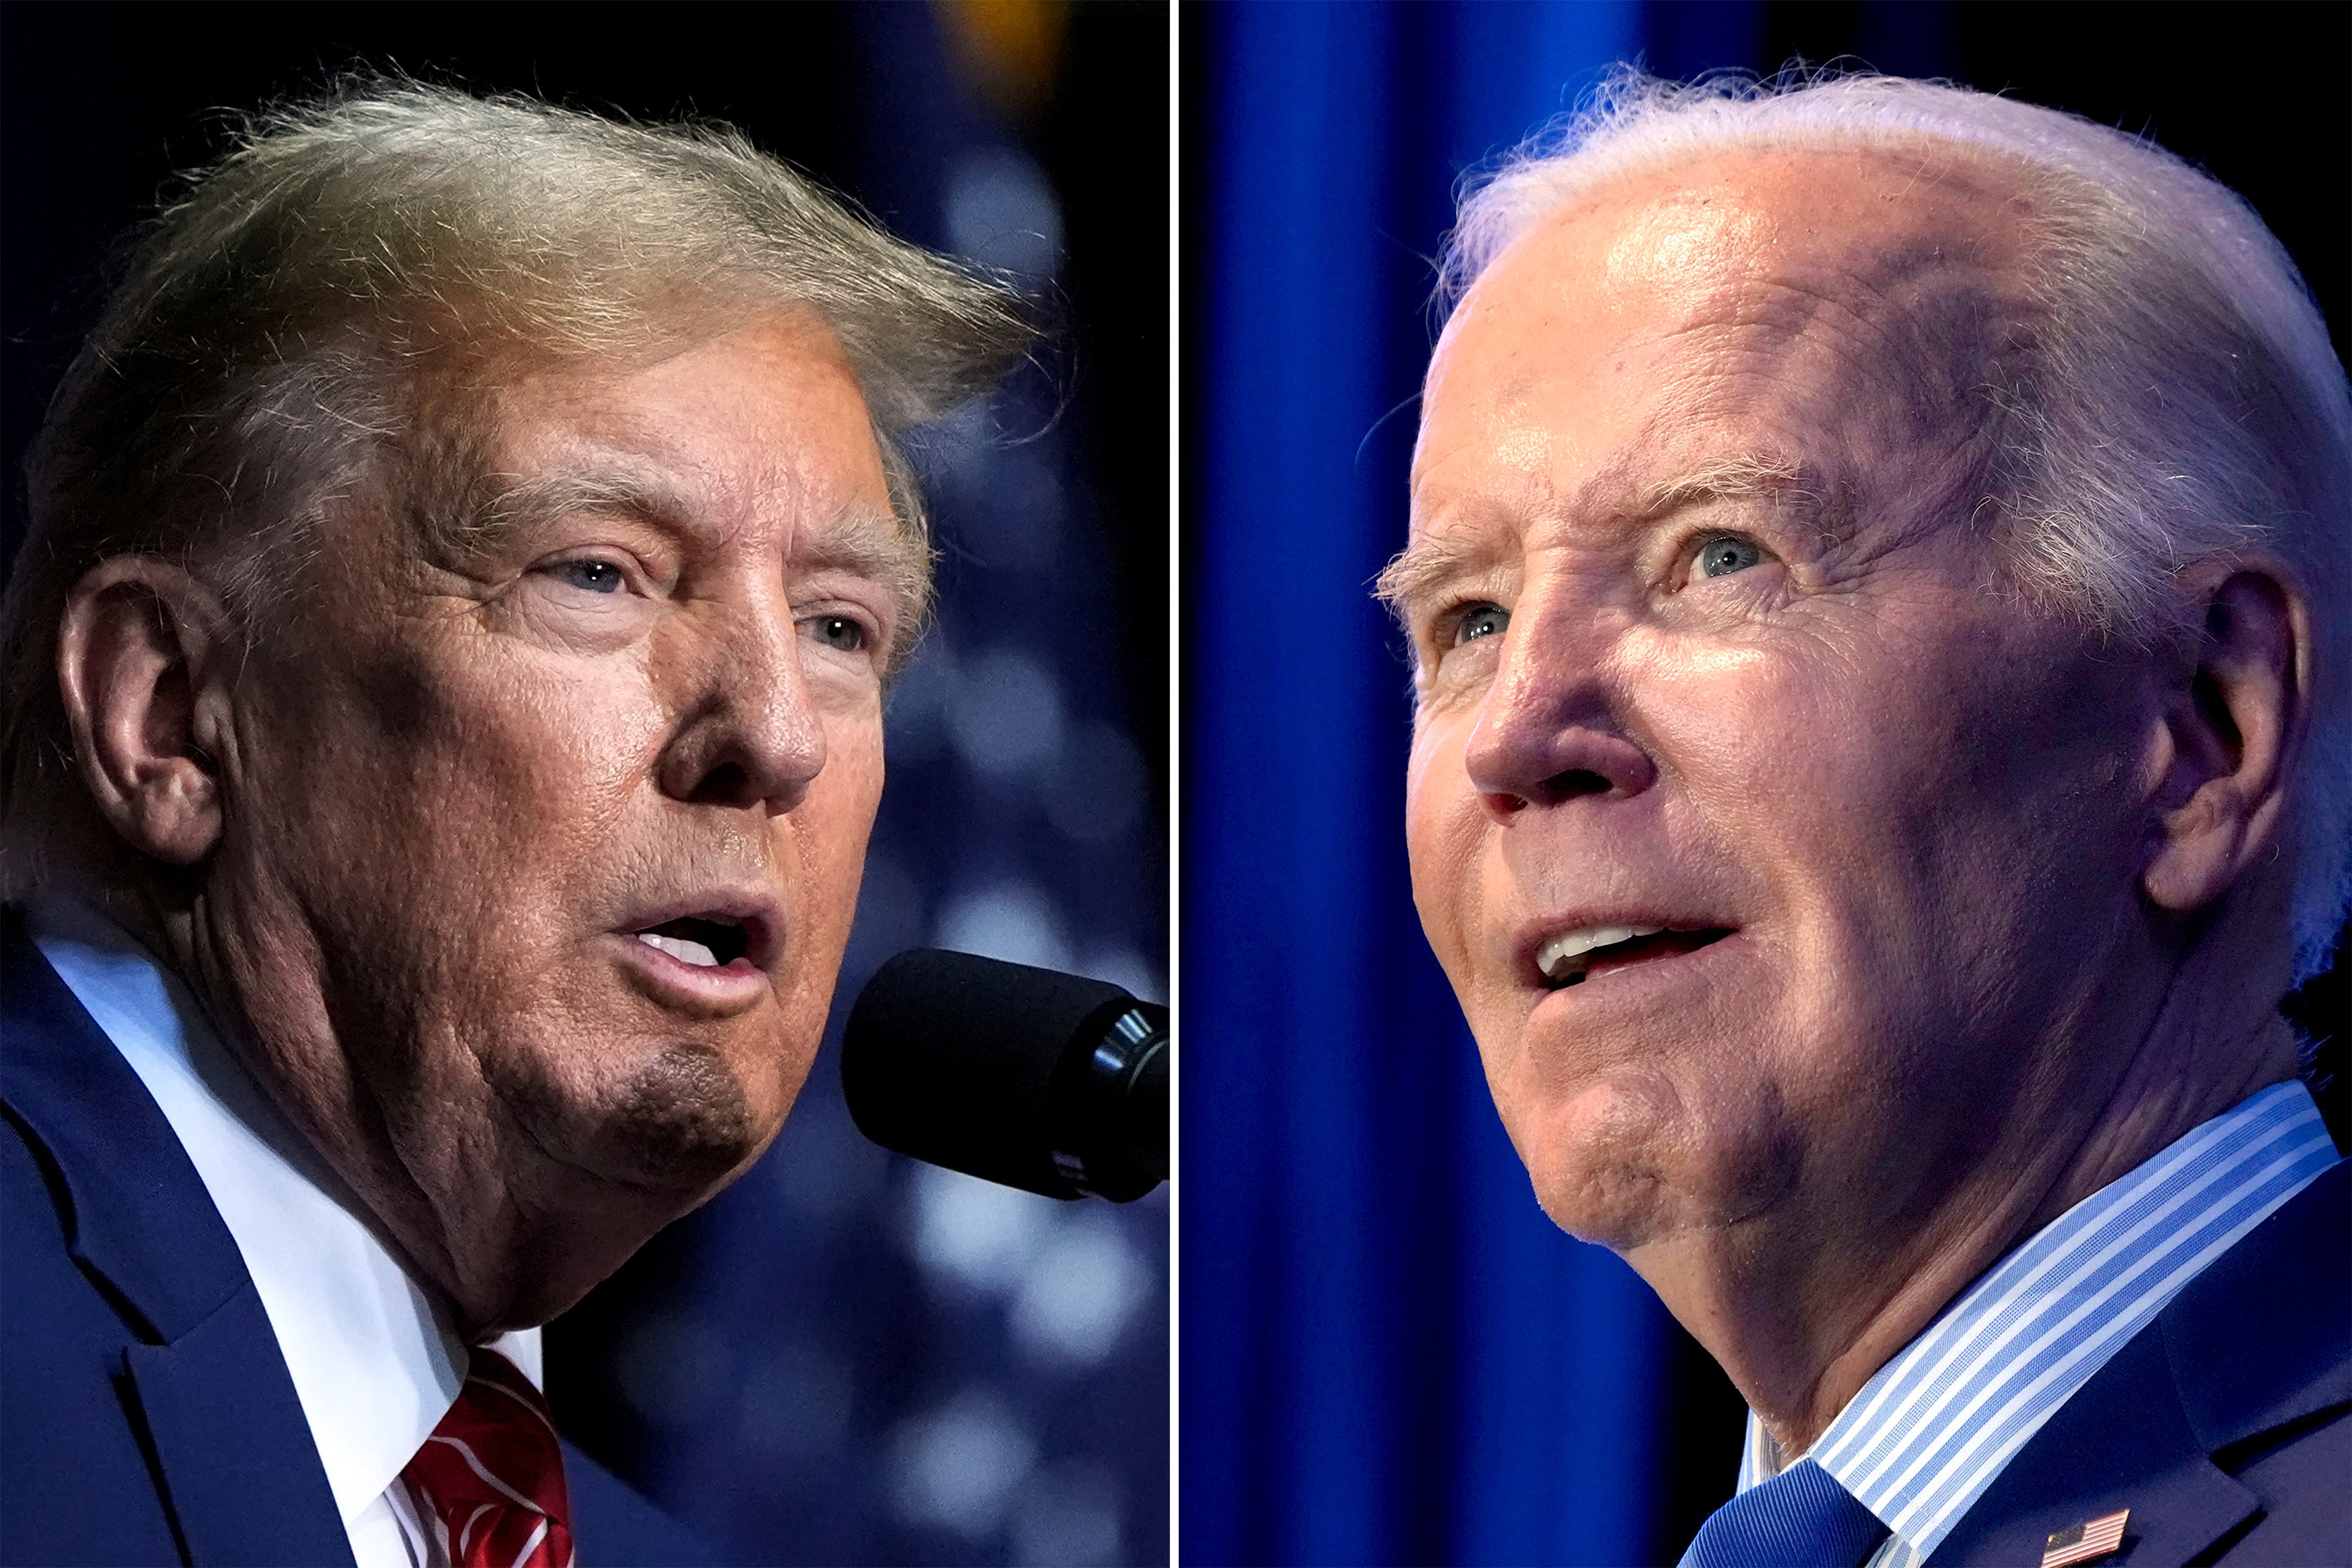 President Joe Biden and former President Donald Trump face no major challengers